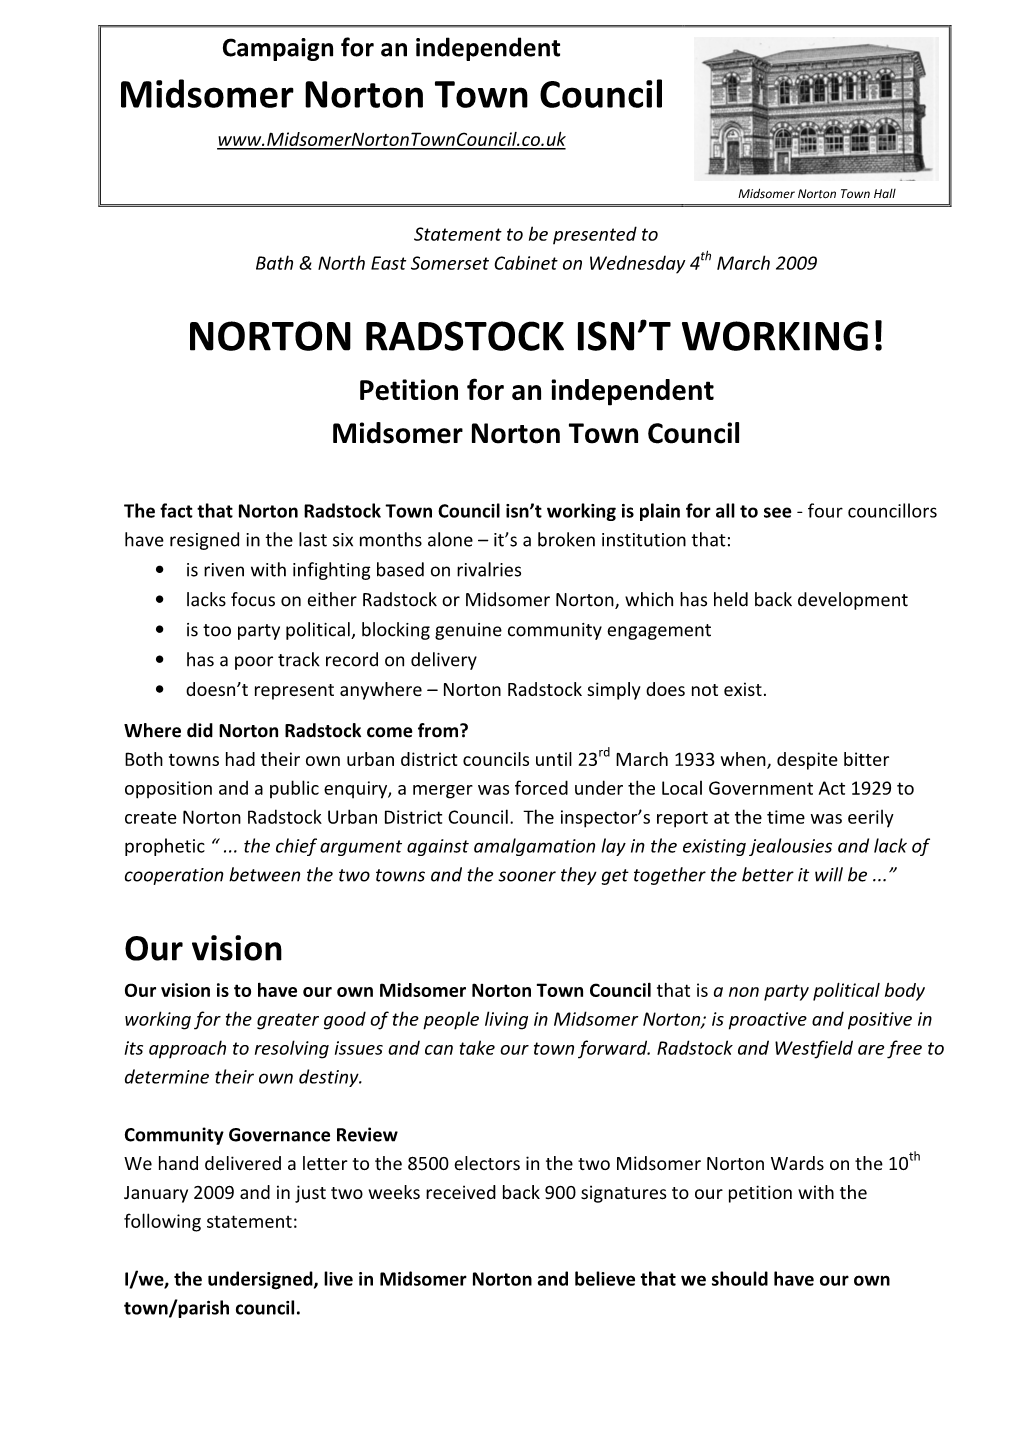 Norton Radstock Isn't Working!